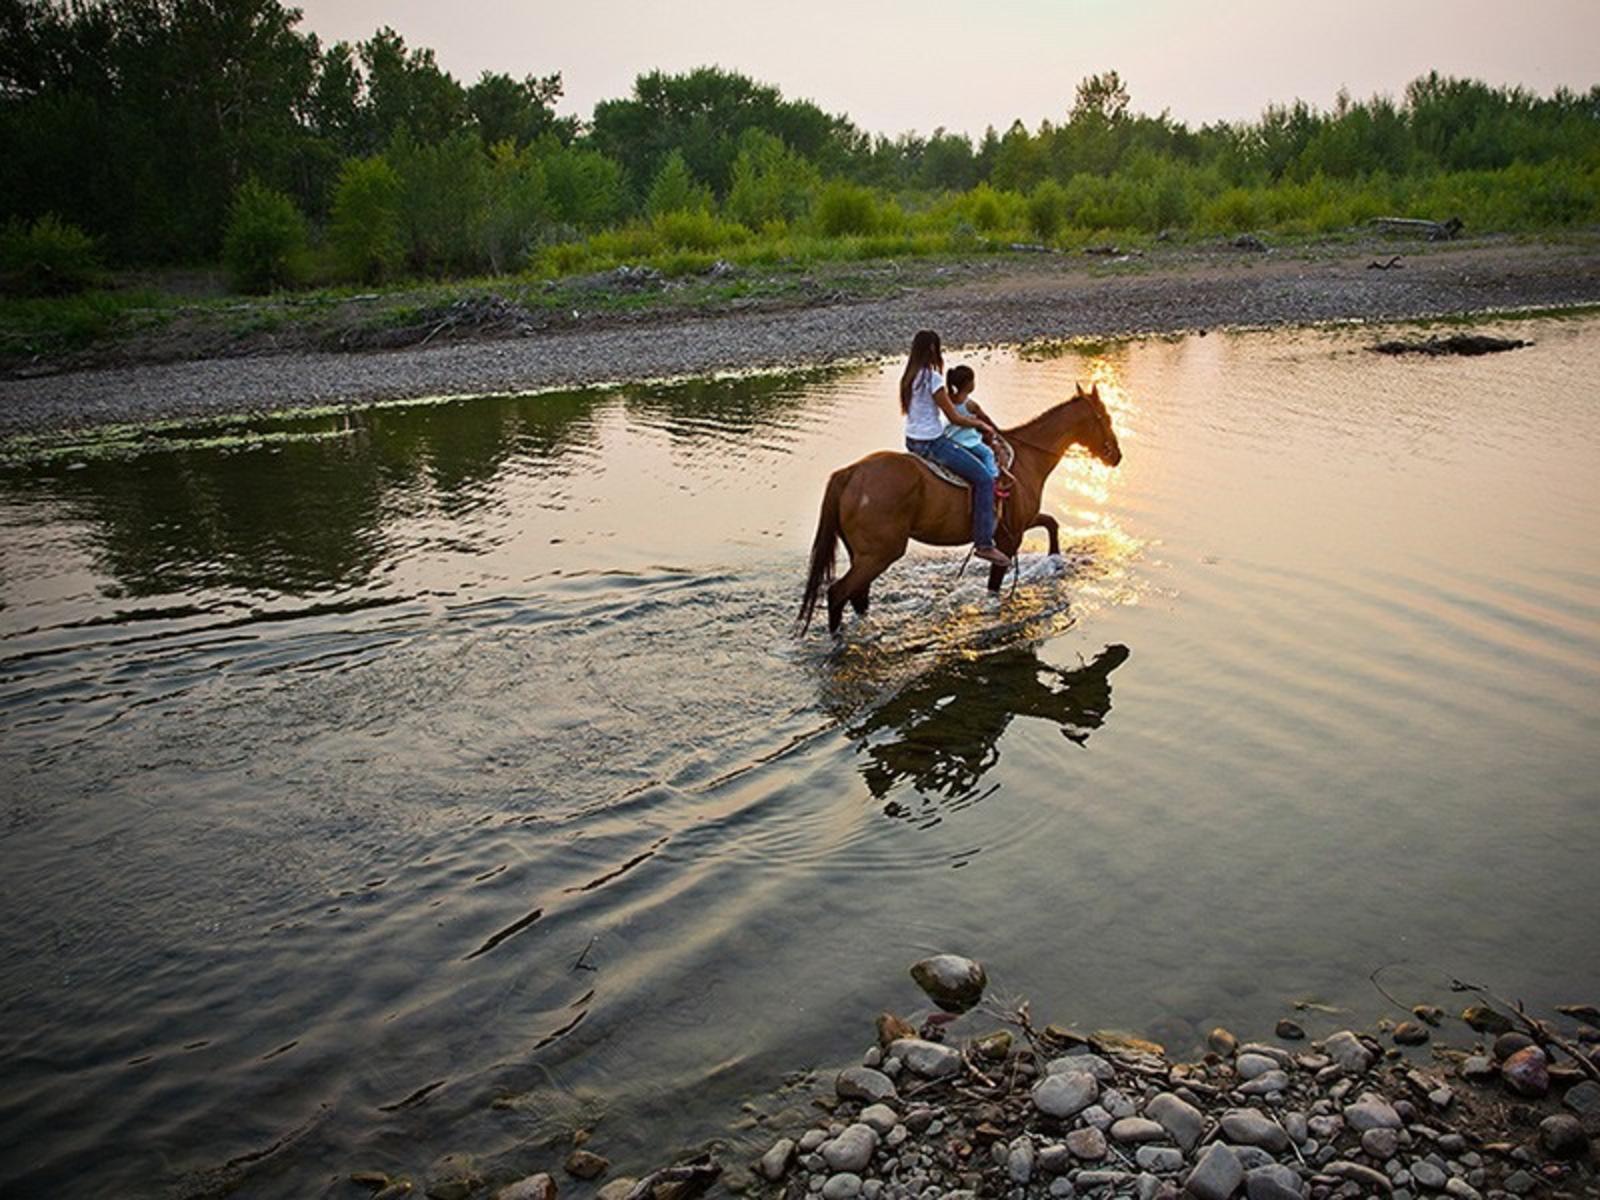 Kendall Edmo takes her daughter on a horseback ride through Blackfeet country in northern Montana. Photo courtesy Rebecca Drobis (rebeccadrobis.com)